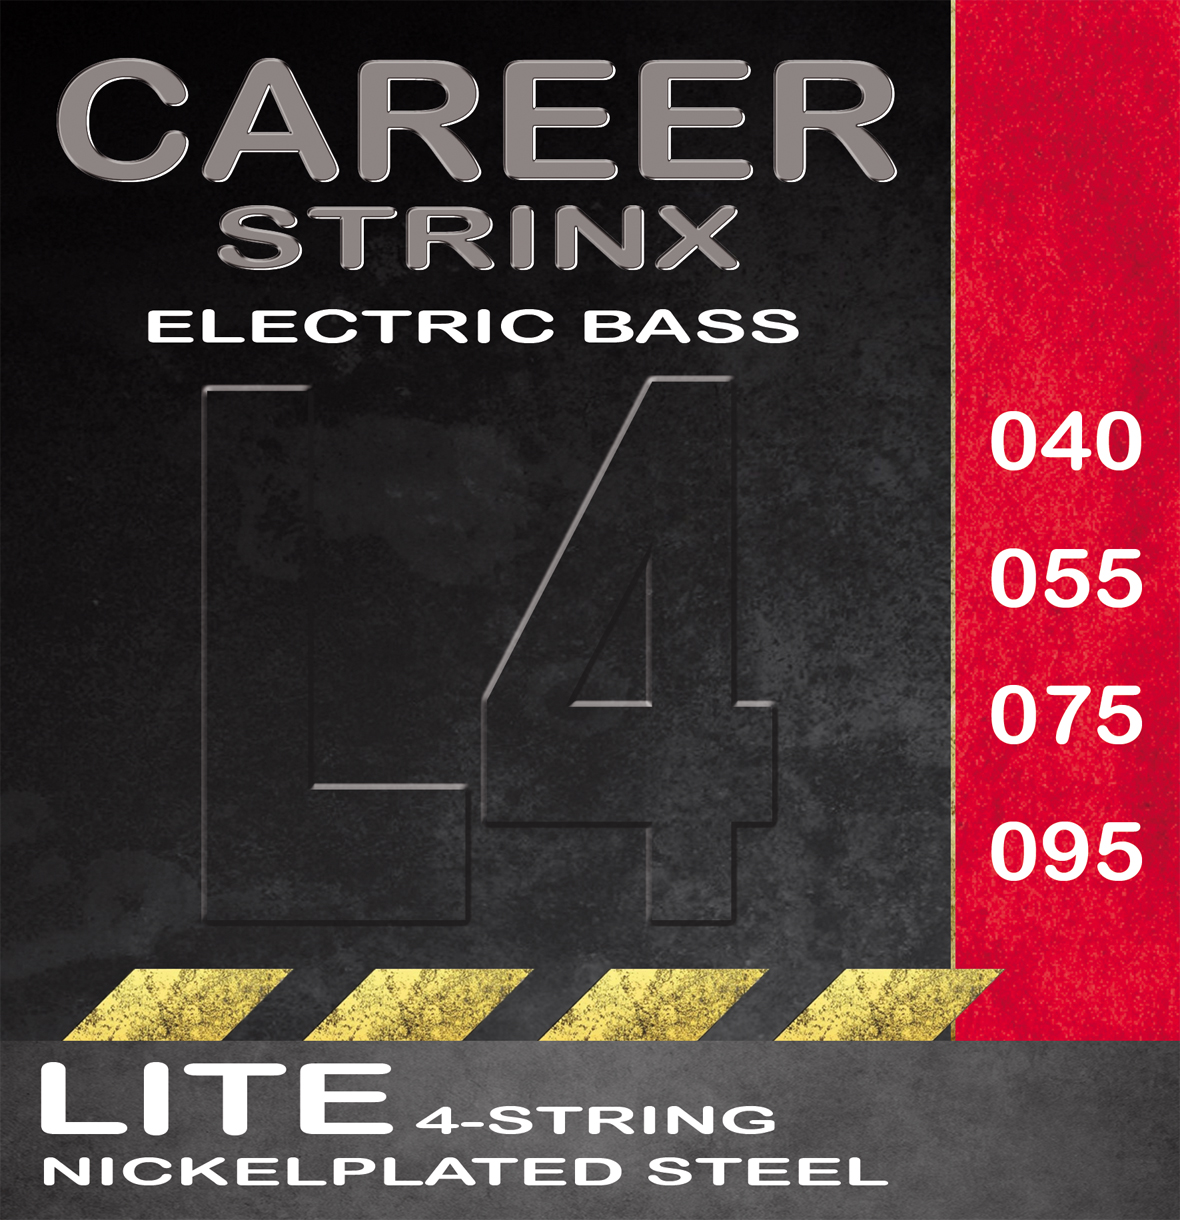 Career Electric Bass Strinx * 